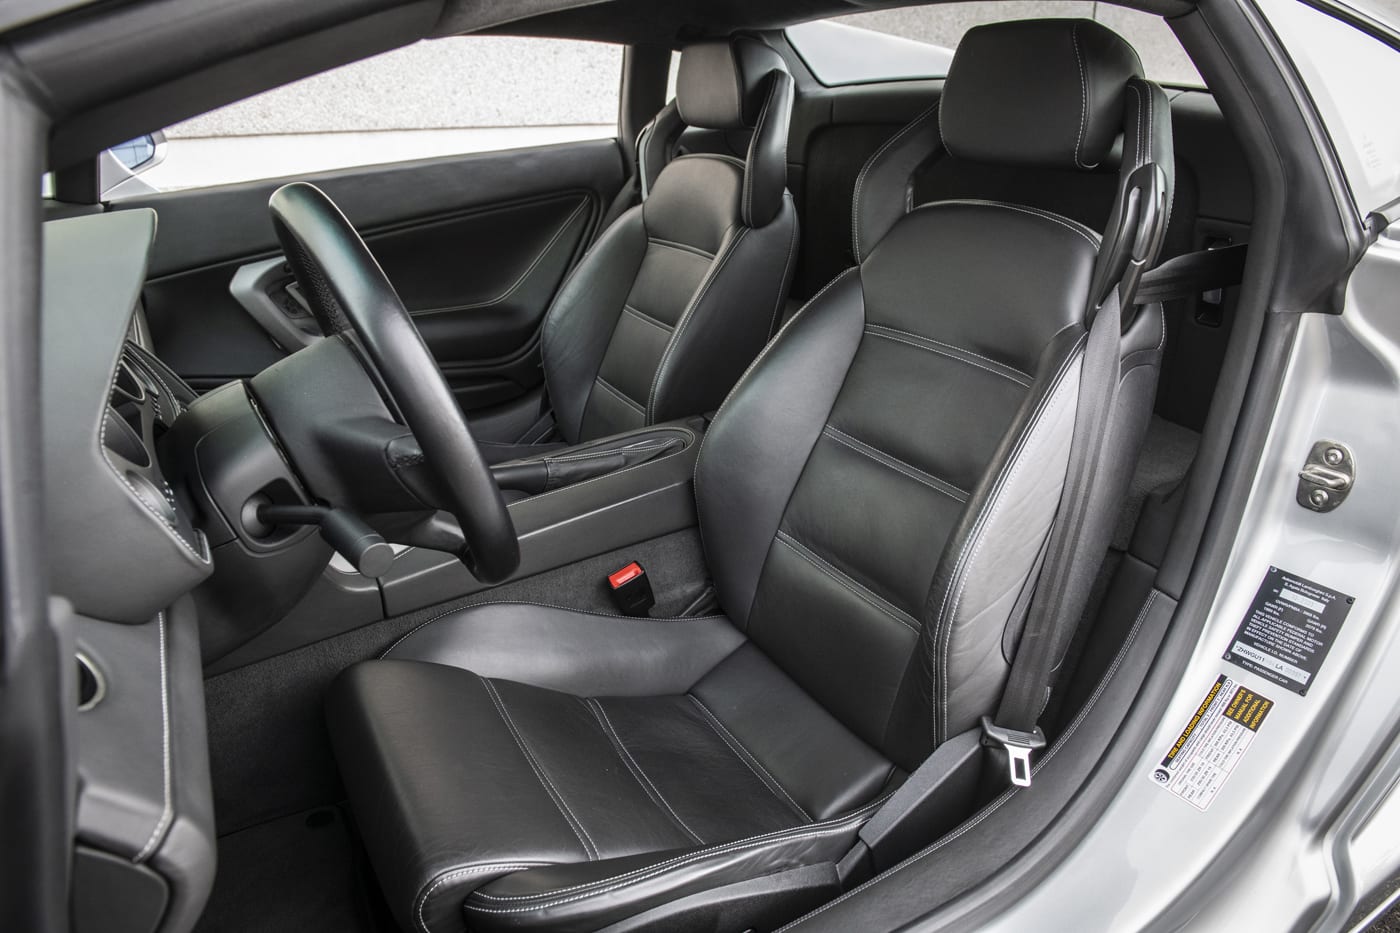 Lamborghini Gallardo interior - Seats